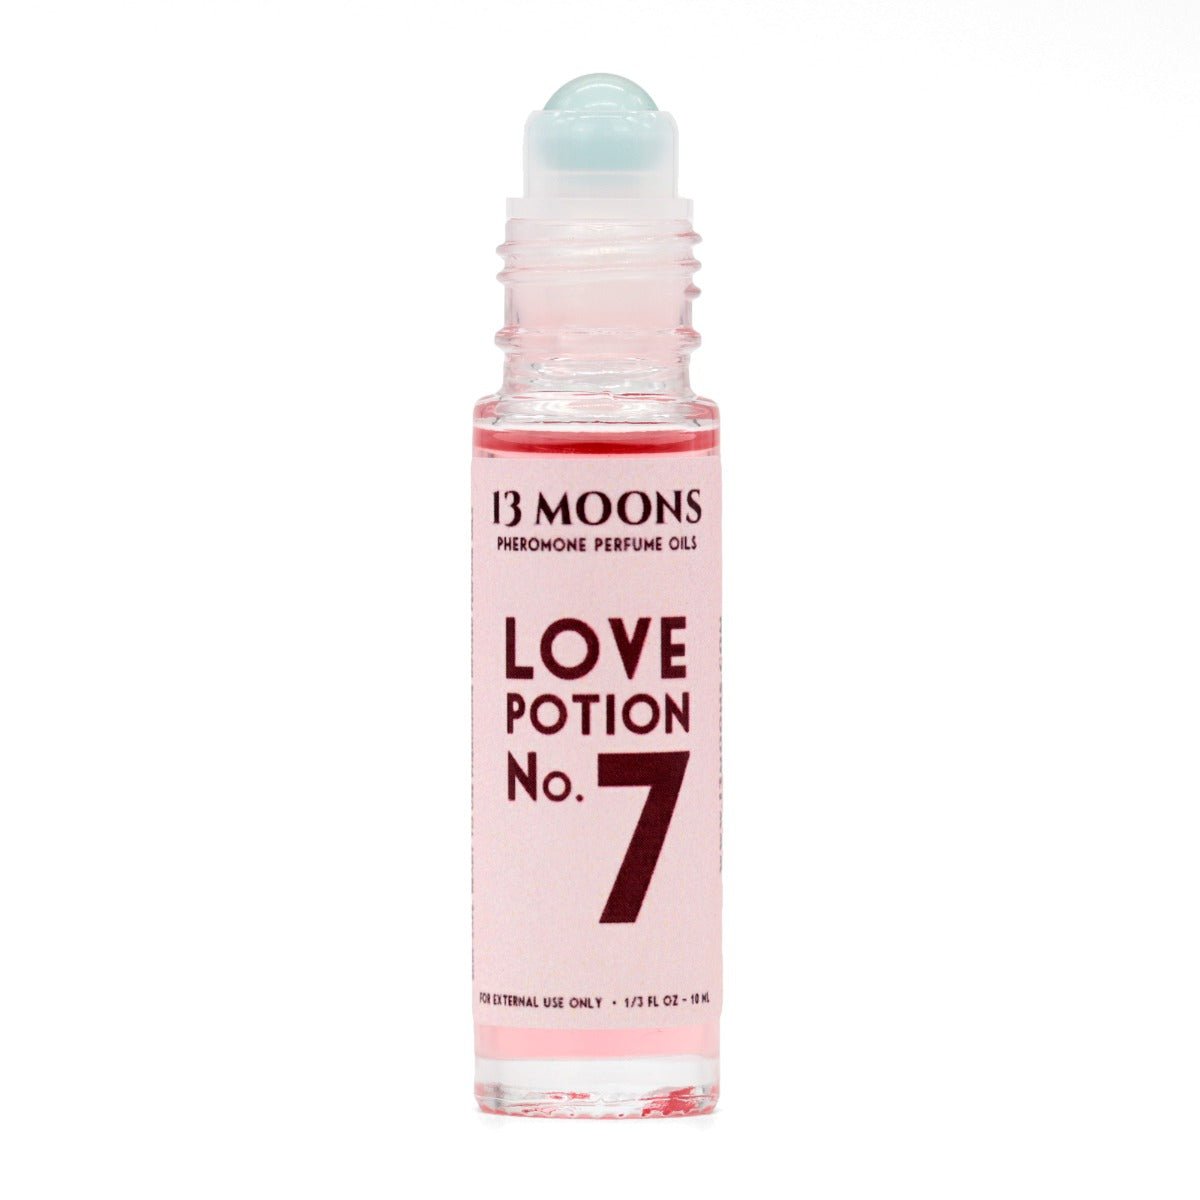 Love Potion Number 7 Pheromone Infused Perfume Roll-on Oil - 13 Moons